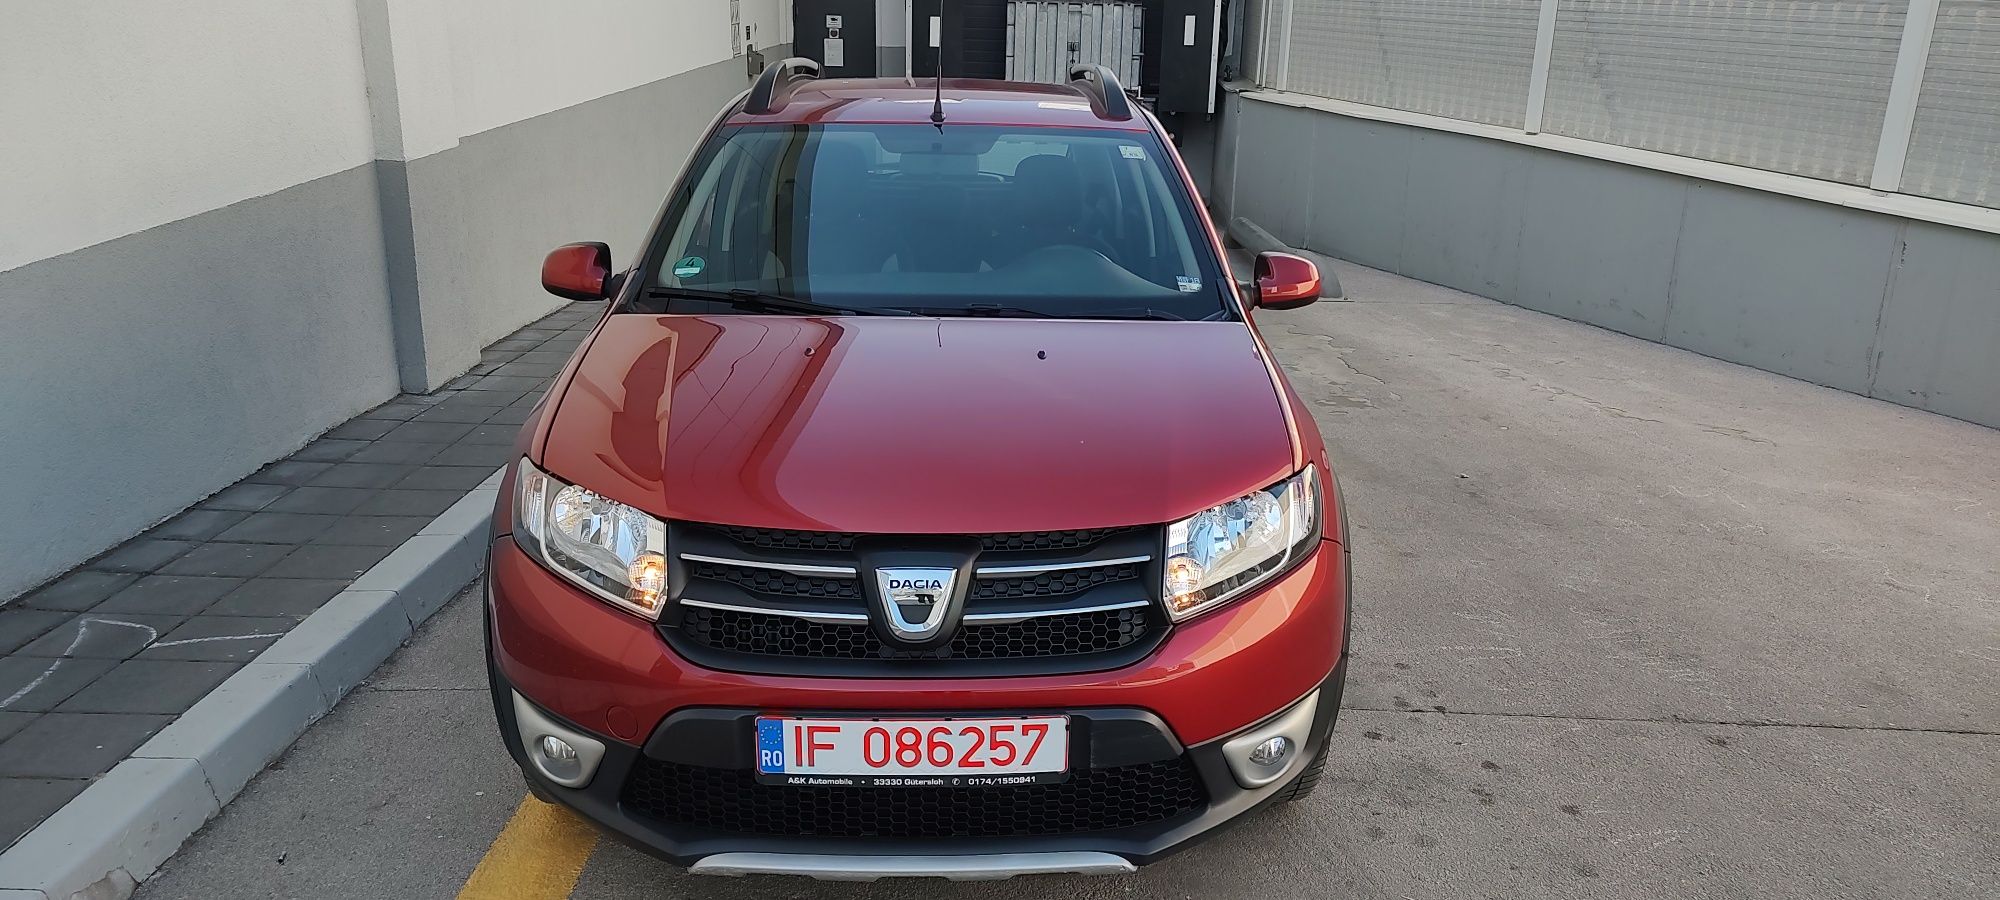 Dacia Sandero Stepway Prestige 2016 EURO 6 / 0.9tCe Start-Stop